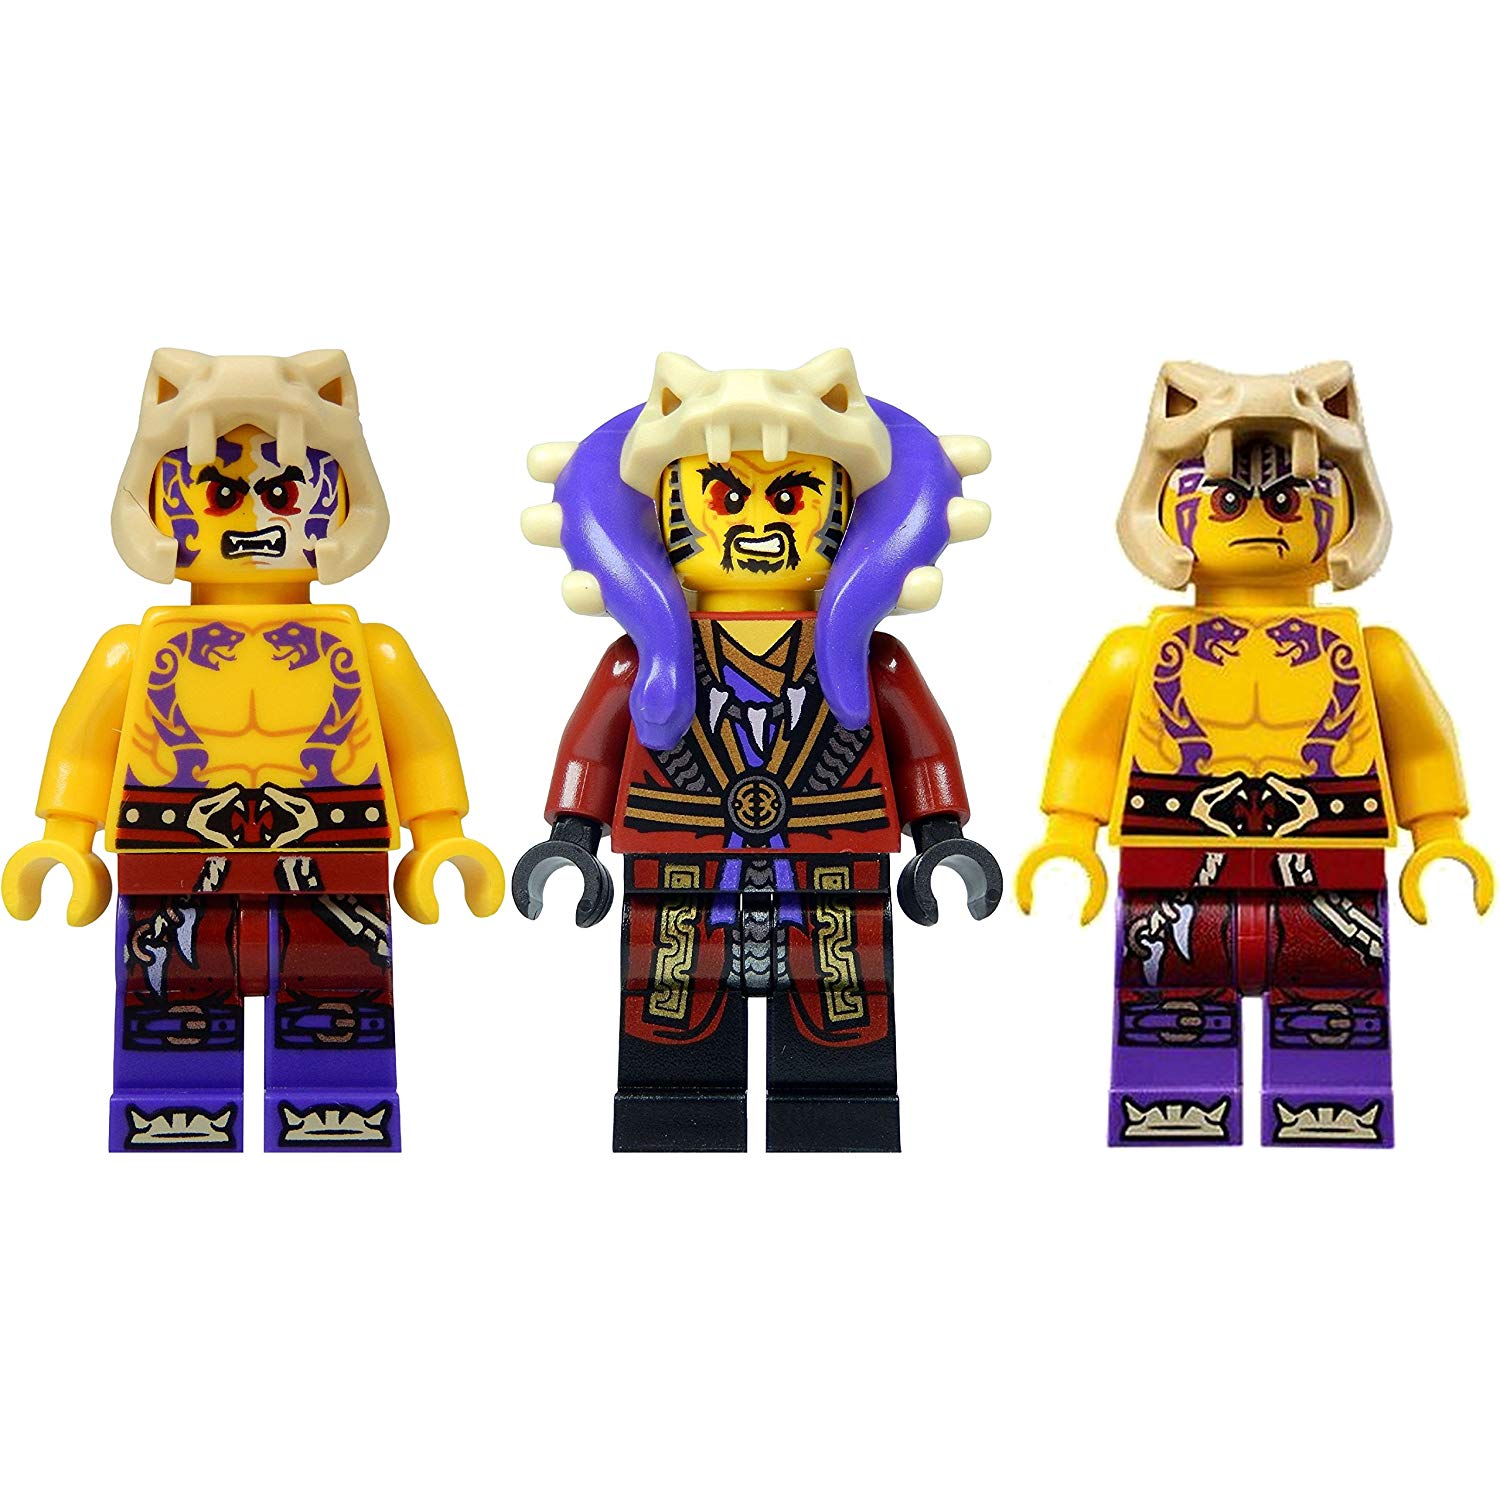 LEGO Ninjago Ninjago Figures Set: 3 Figures (Master, Krait and Sleven)